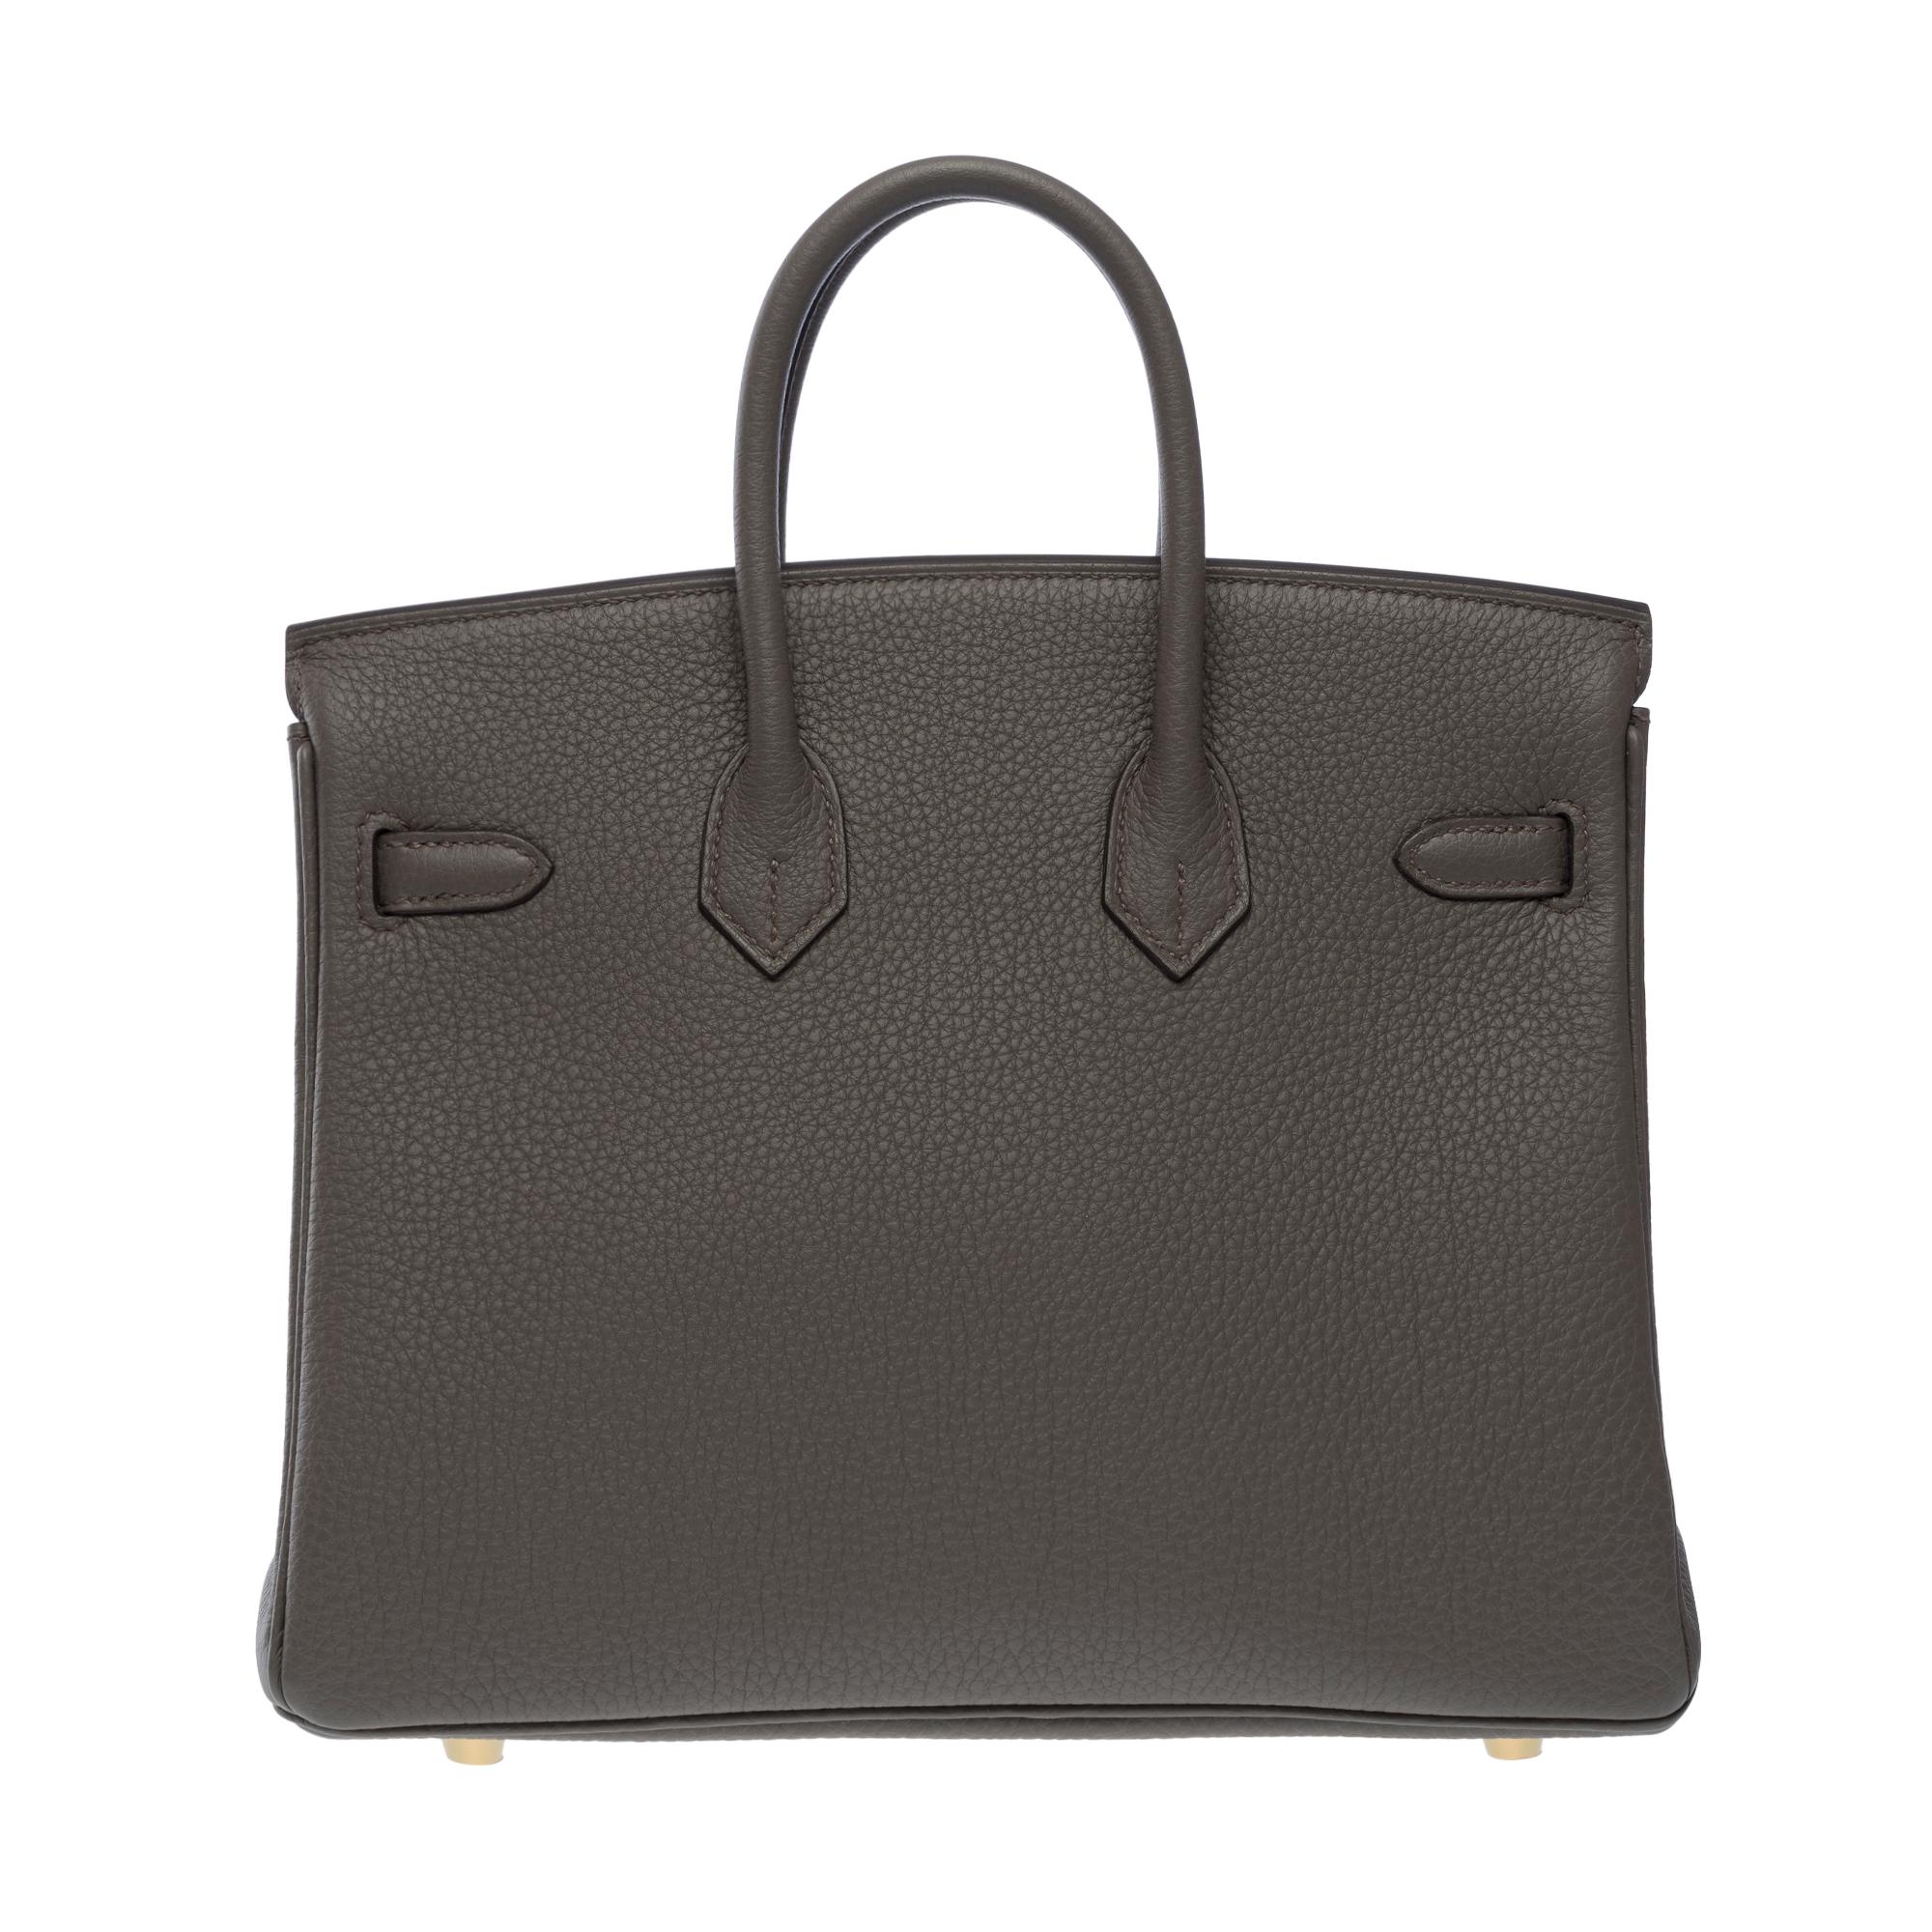 Fantastic New Hermes Birkin 25cm handbag in Etain Togo leather, GHW In New Condition In Paris, IDF